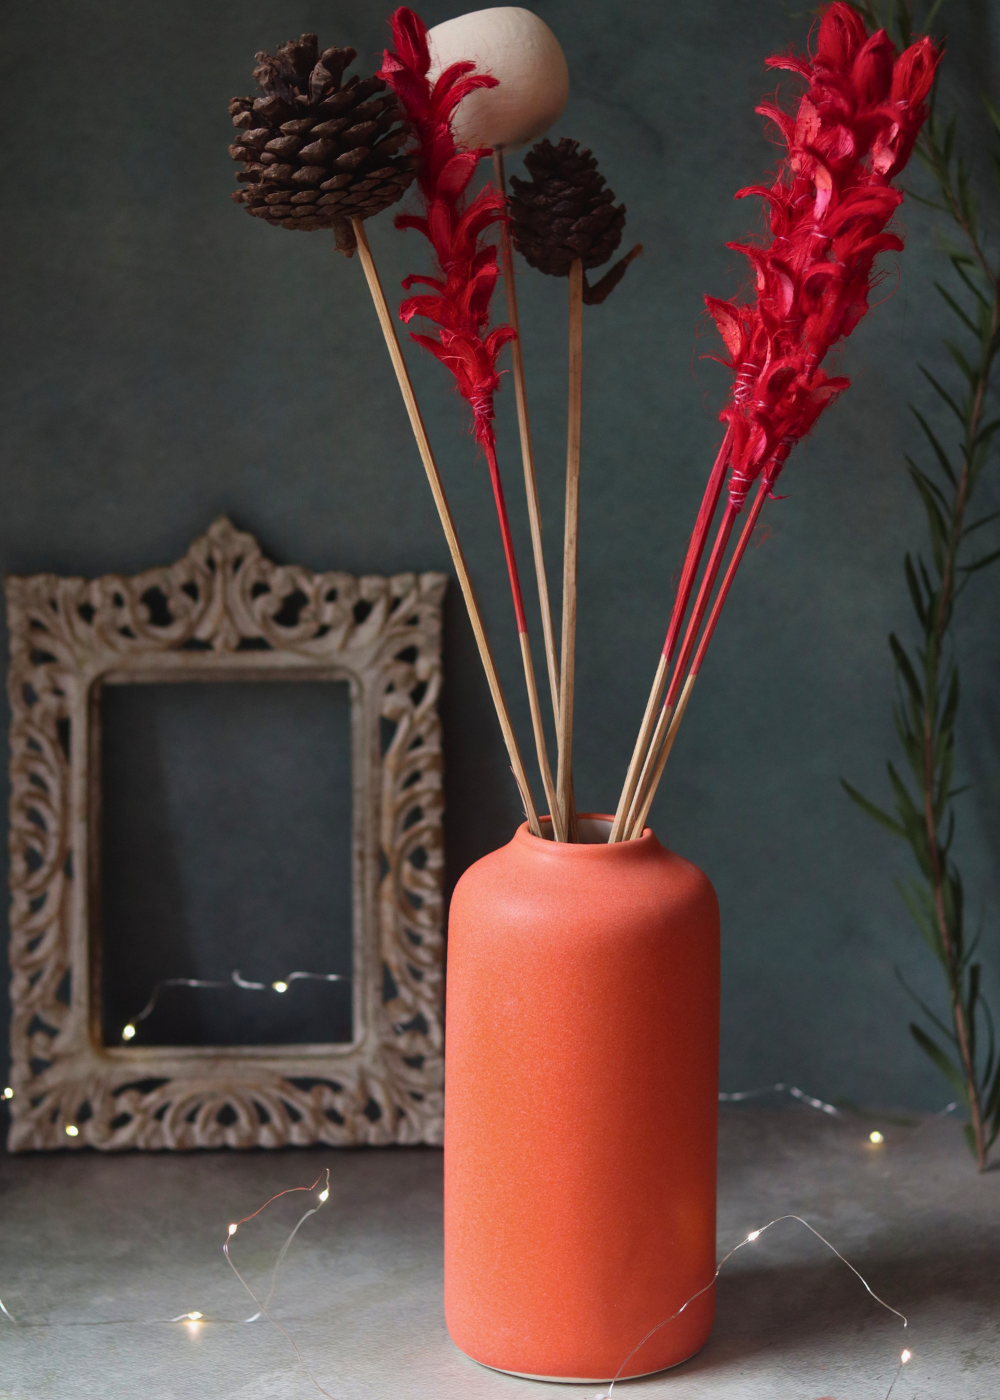 Handmade ceramic flower vase with dried flowers